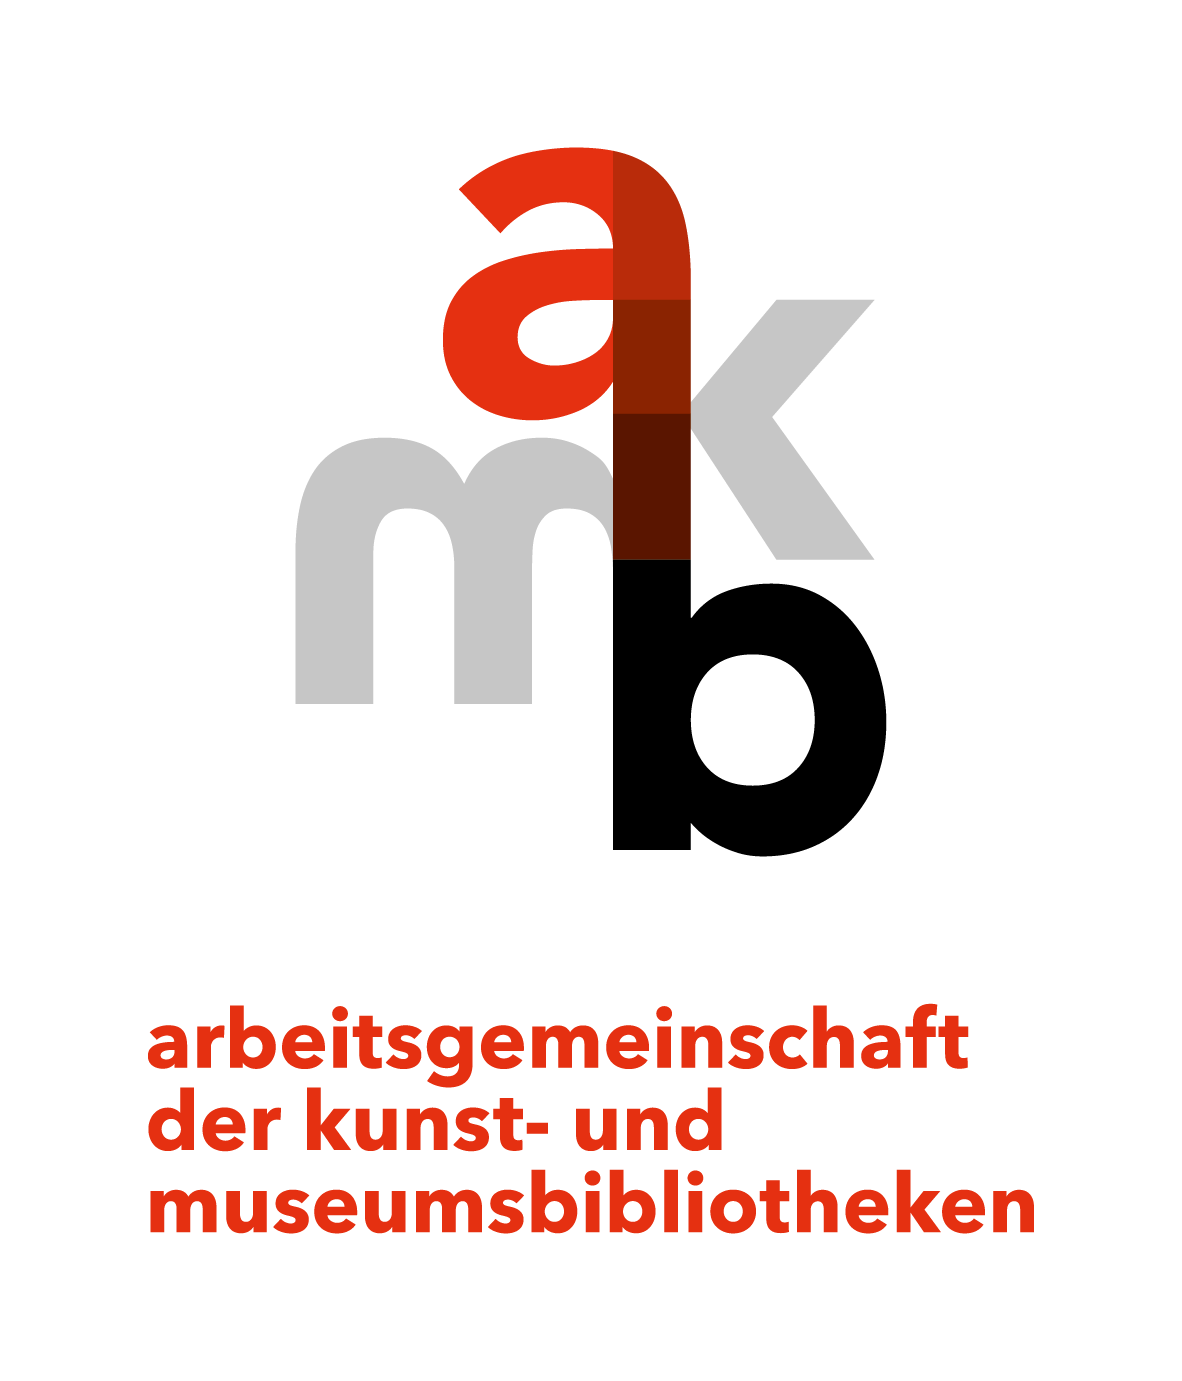 AKMB Logo